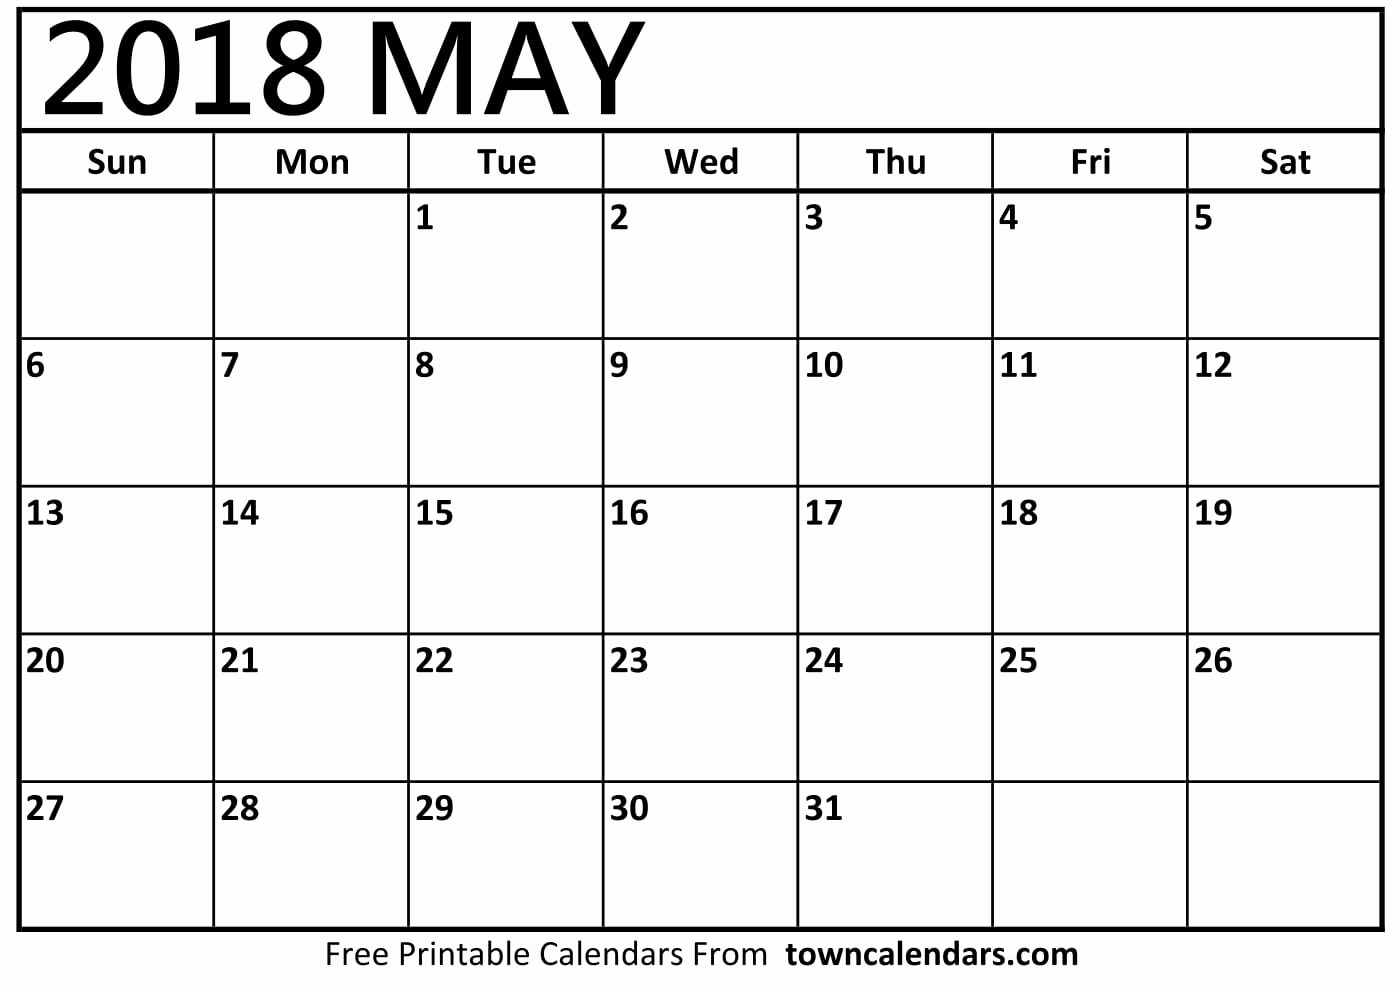 Free May 2018 Calendar Template Inspirational Free 5 May 2018 Calendar Printable Template Pdf source